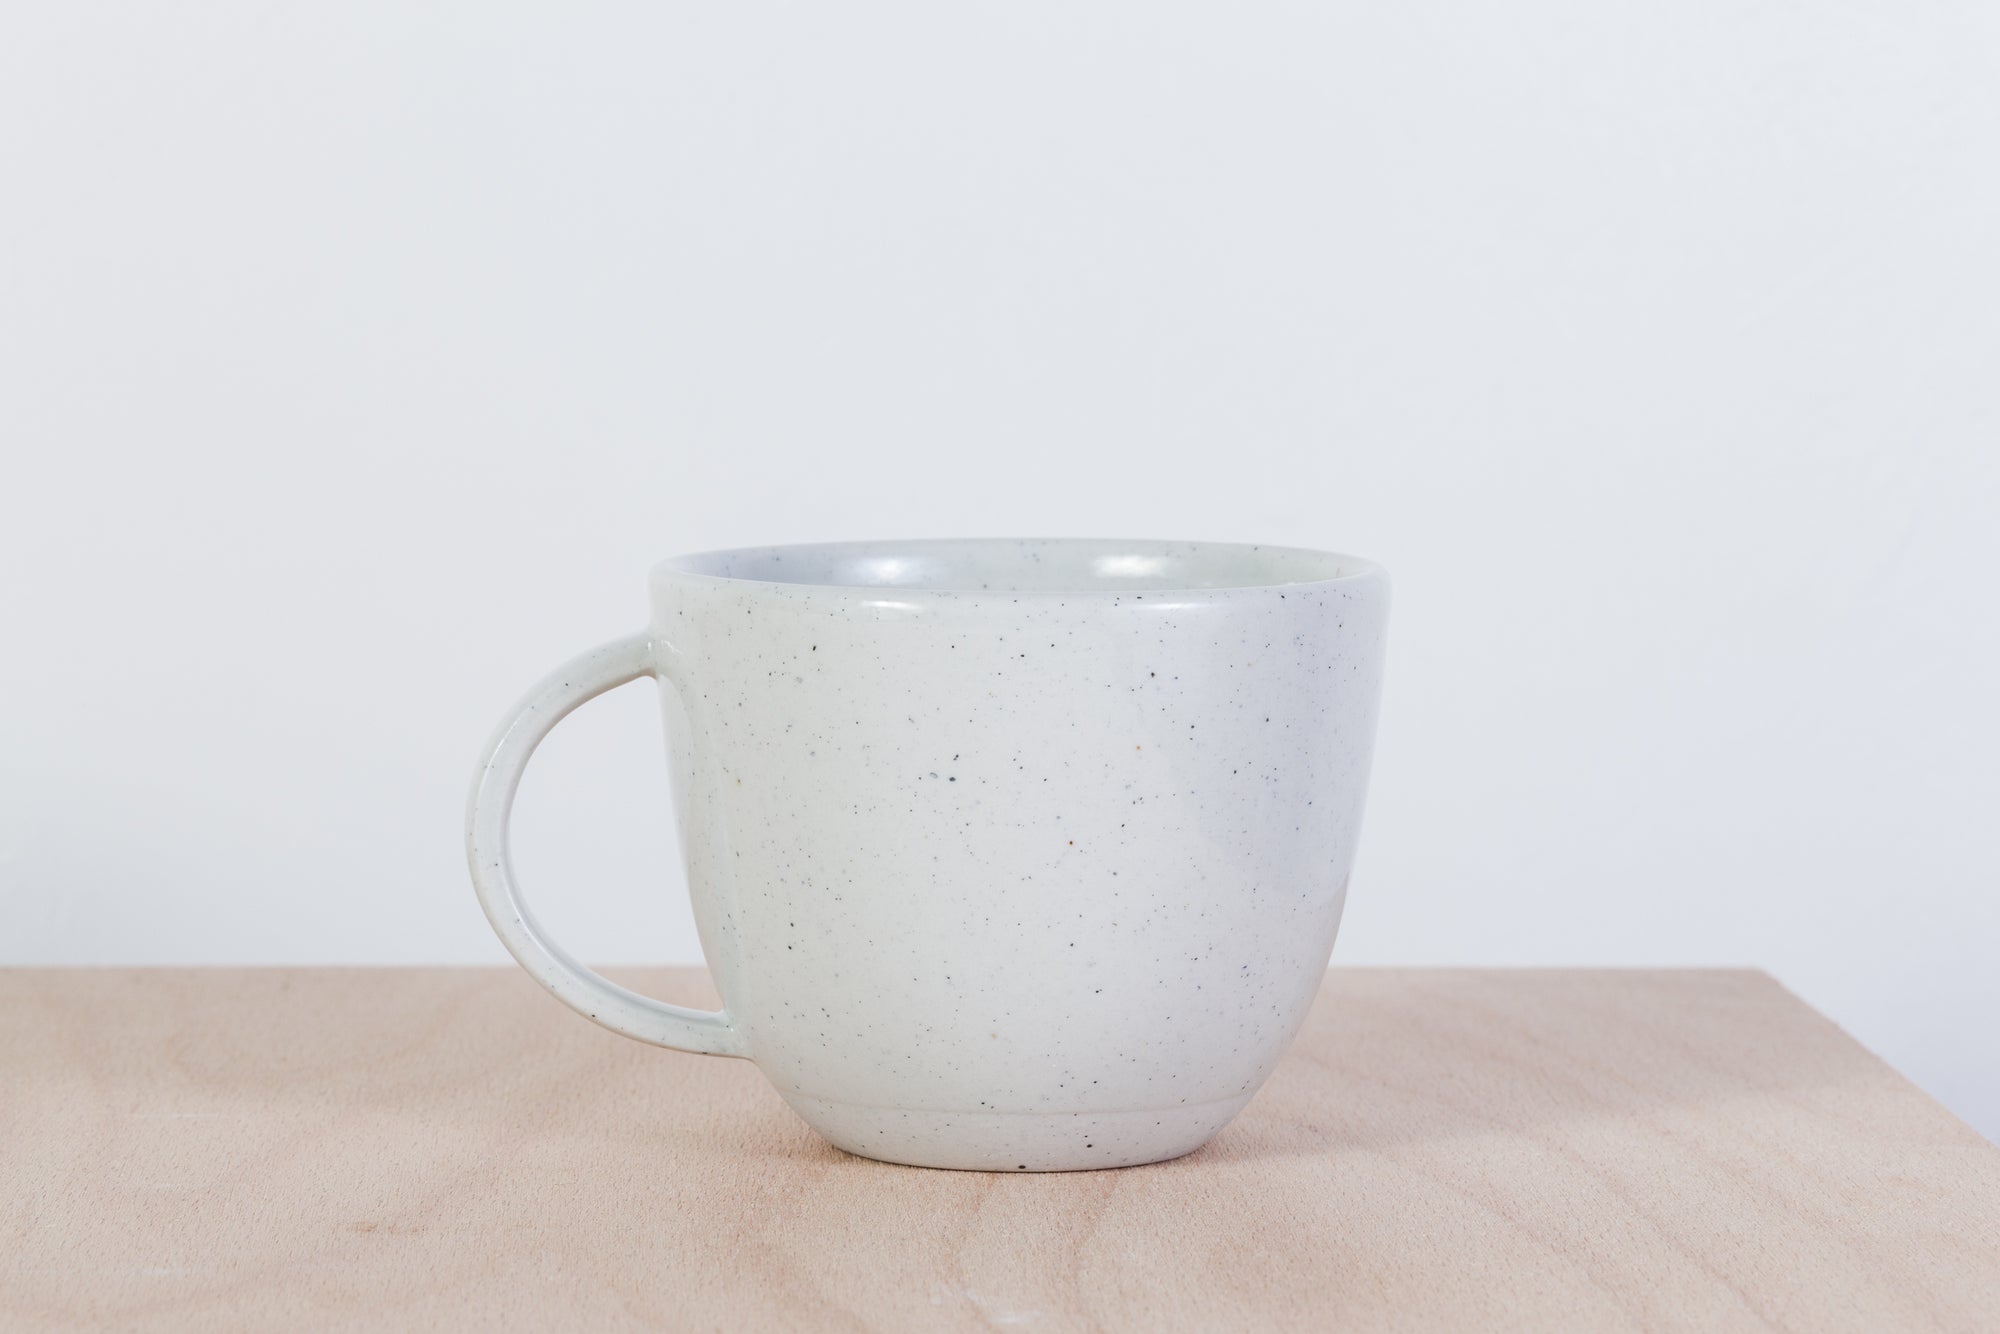 Simple gray mug with dots